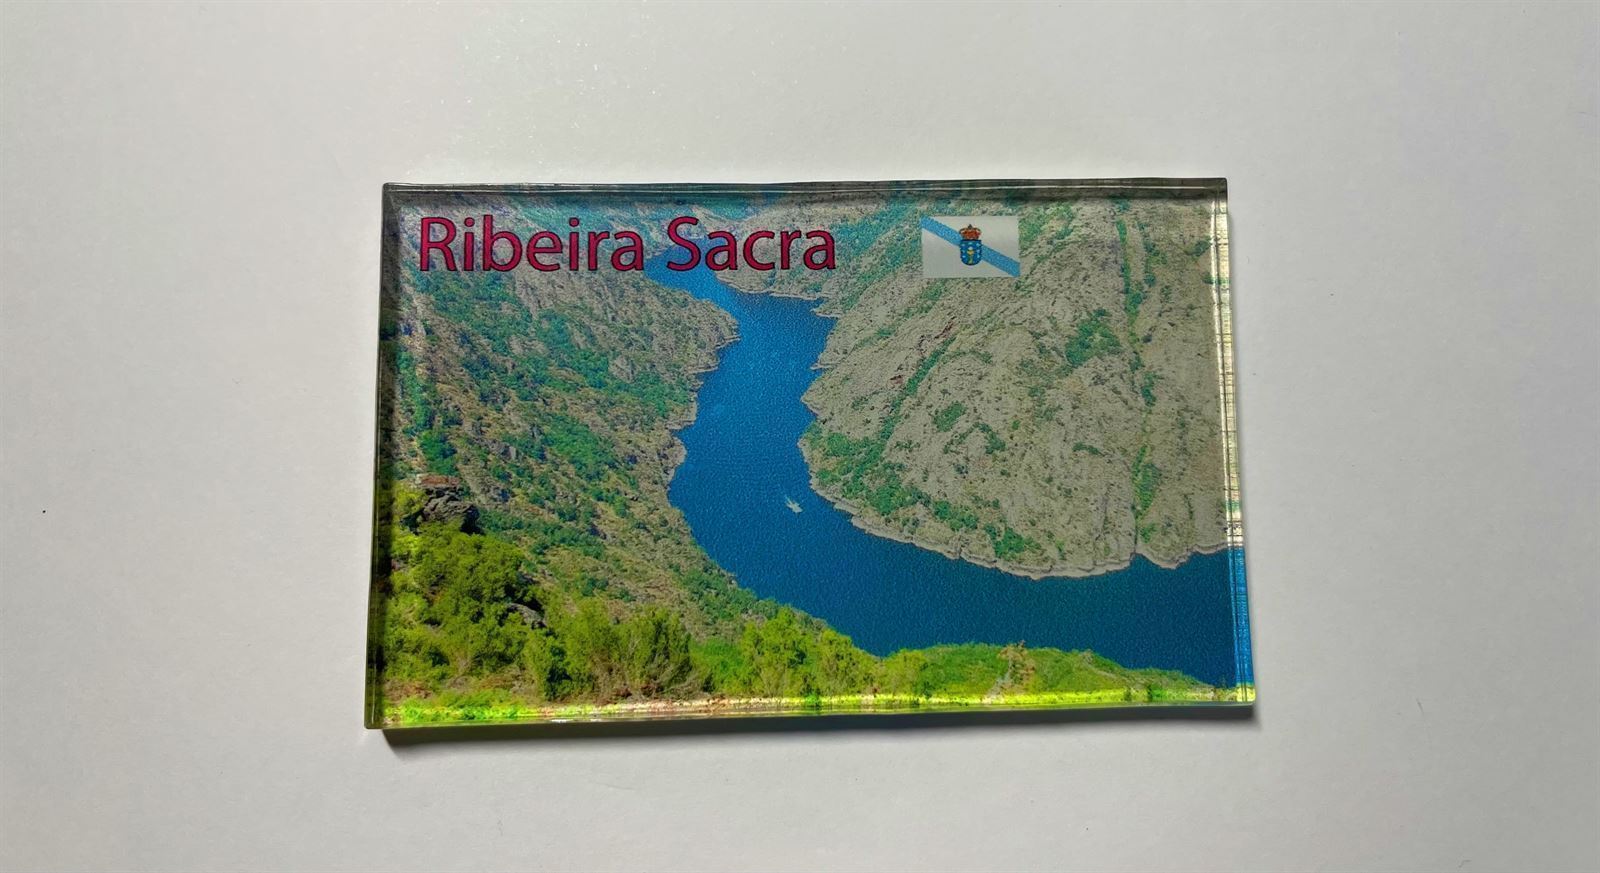 IMAN METACRILATO 8x5cms FOTO RIBEIRA SACRA 6 - Imagen 1